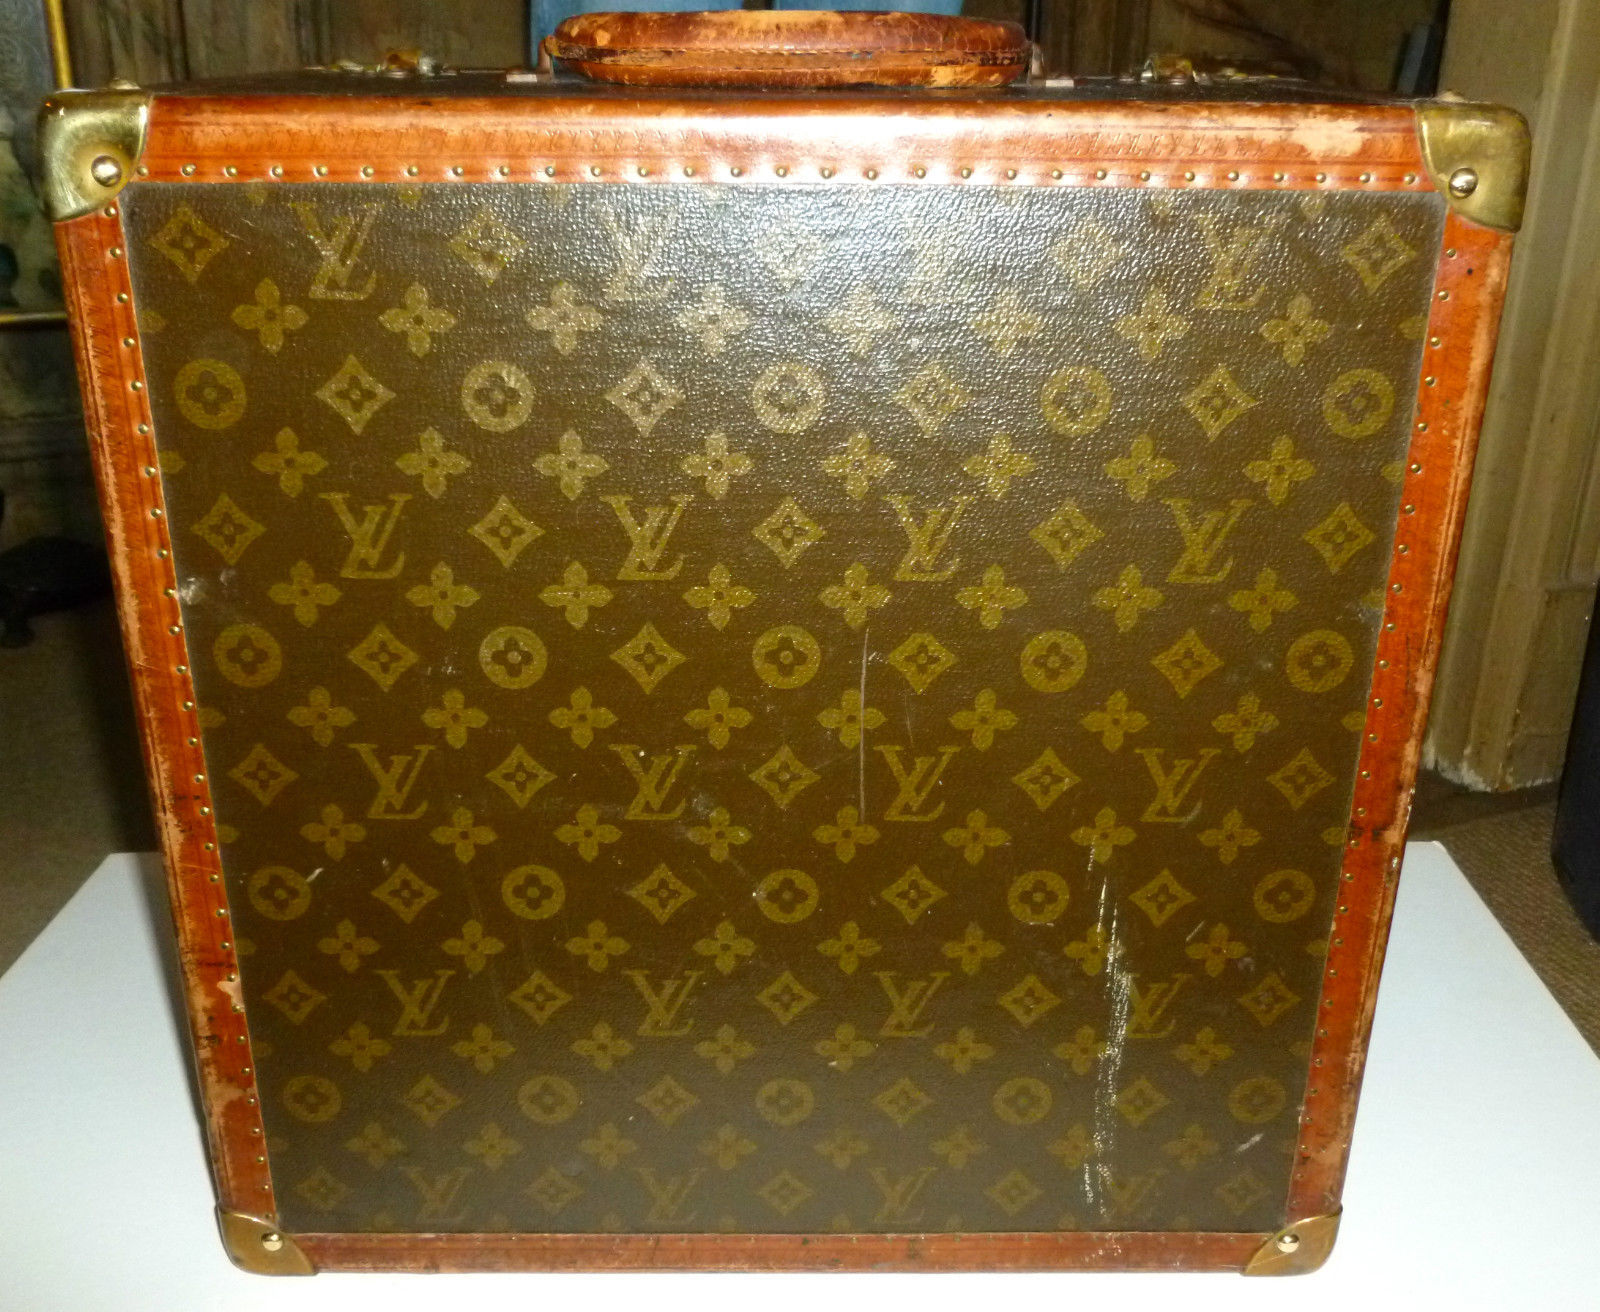 Vintage Louis Vuitton Monogram Trunk Hard Suitcase Travel Luggage c.1900-1930 - 1900-1950